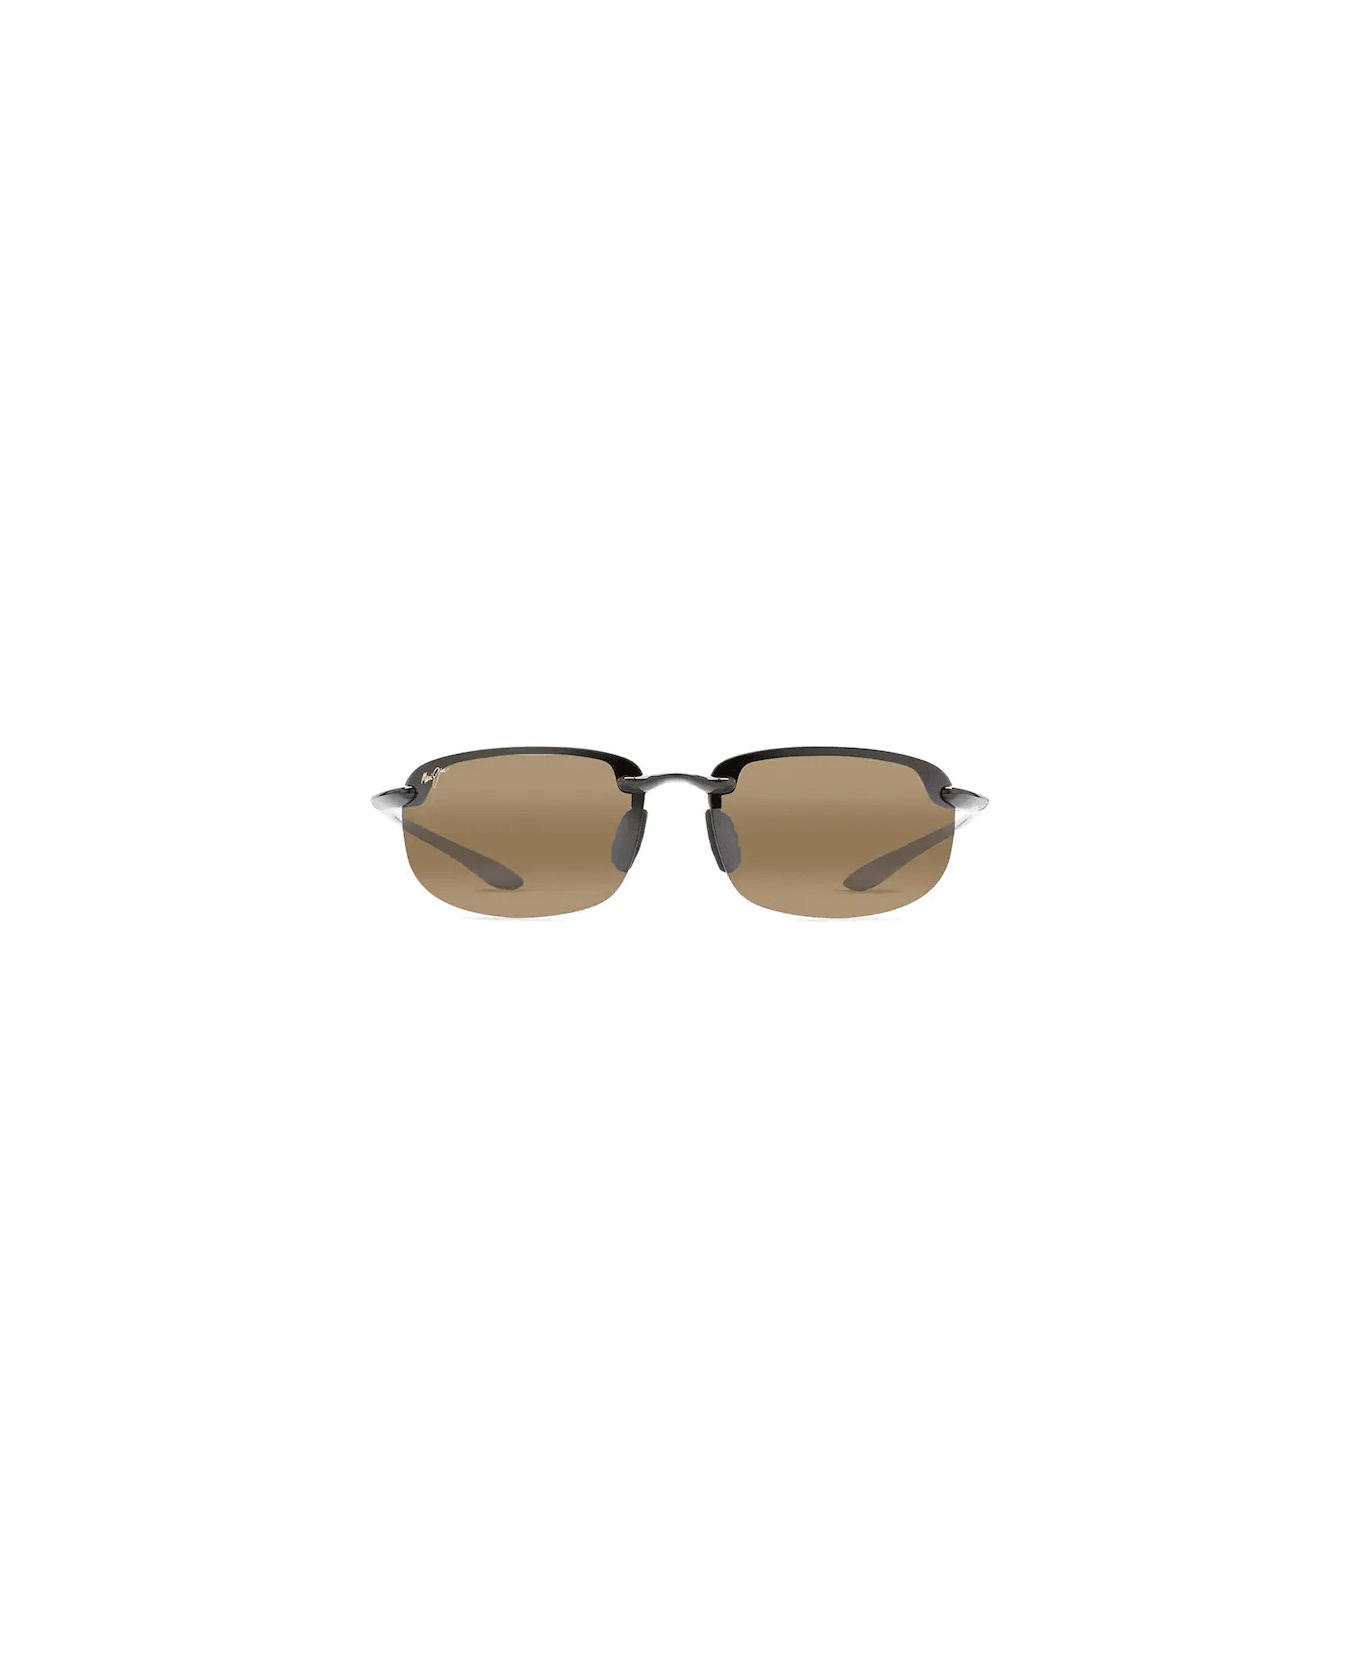 Maui Jim Ho'okipa H407 02 Sunglasses - Nero lente bronze